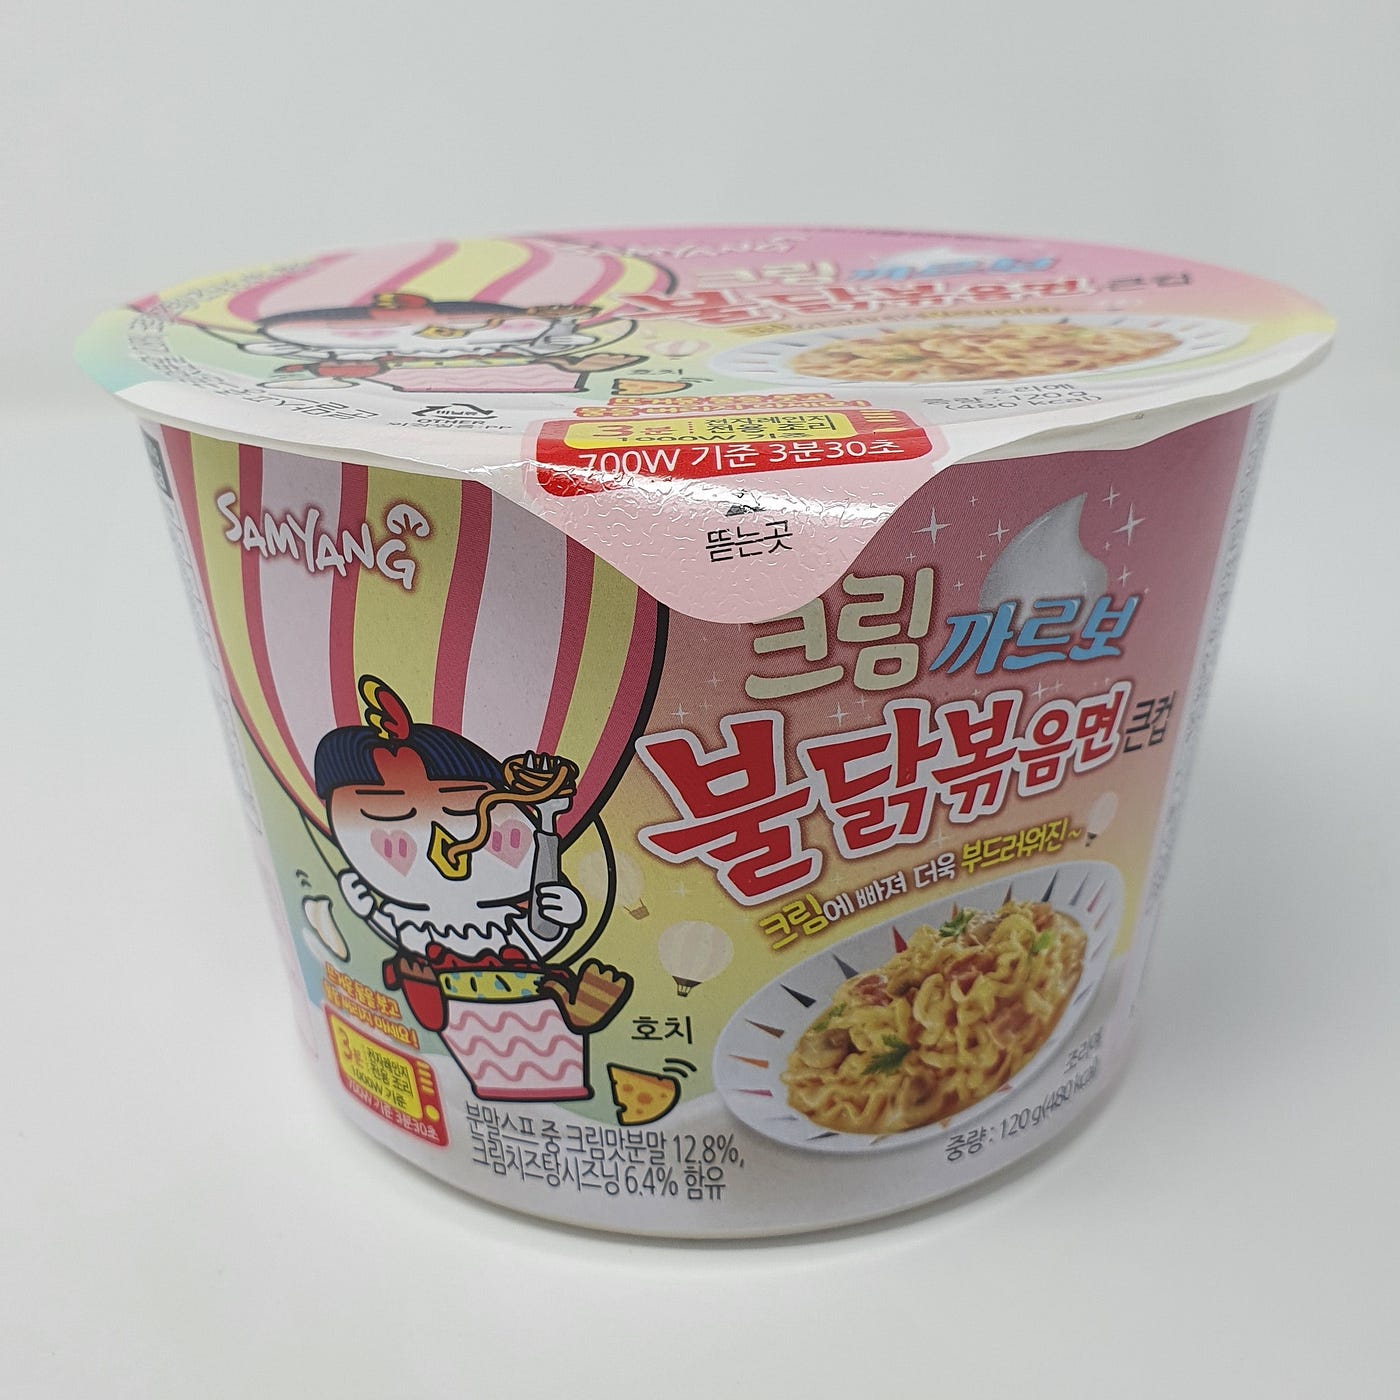 How to Prepare Samyang Cream Carbonara Buldalk Bokkeum Myeon Instant Noodles  | by Burger | Medium